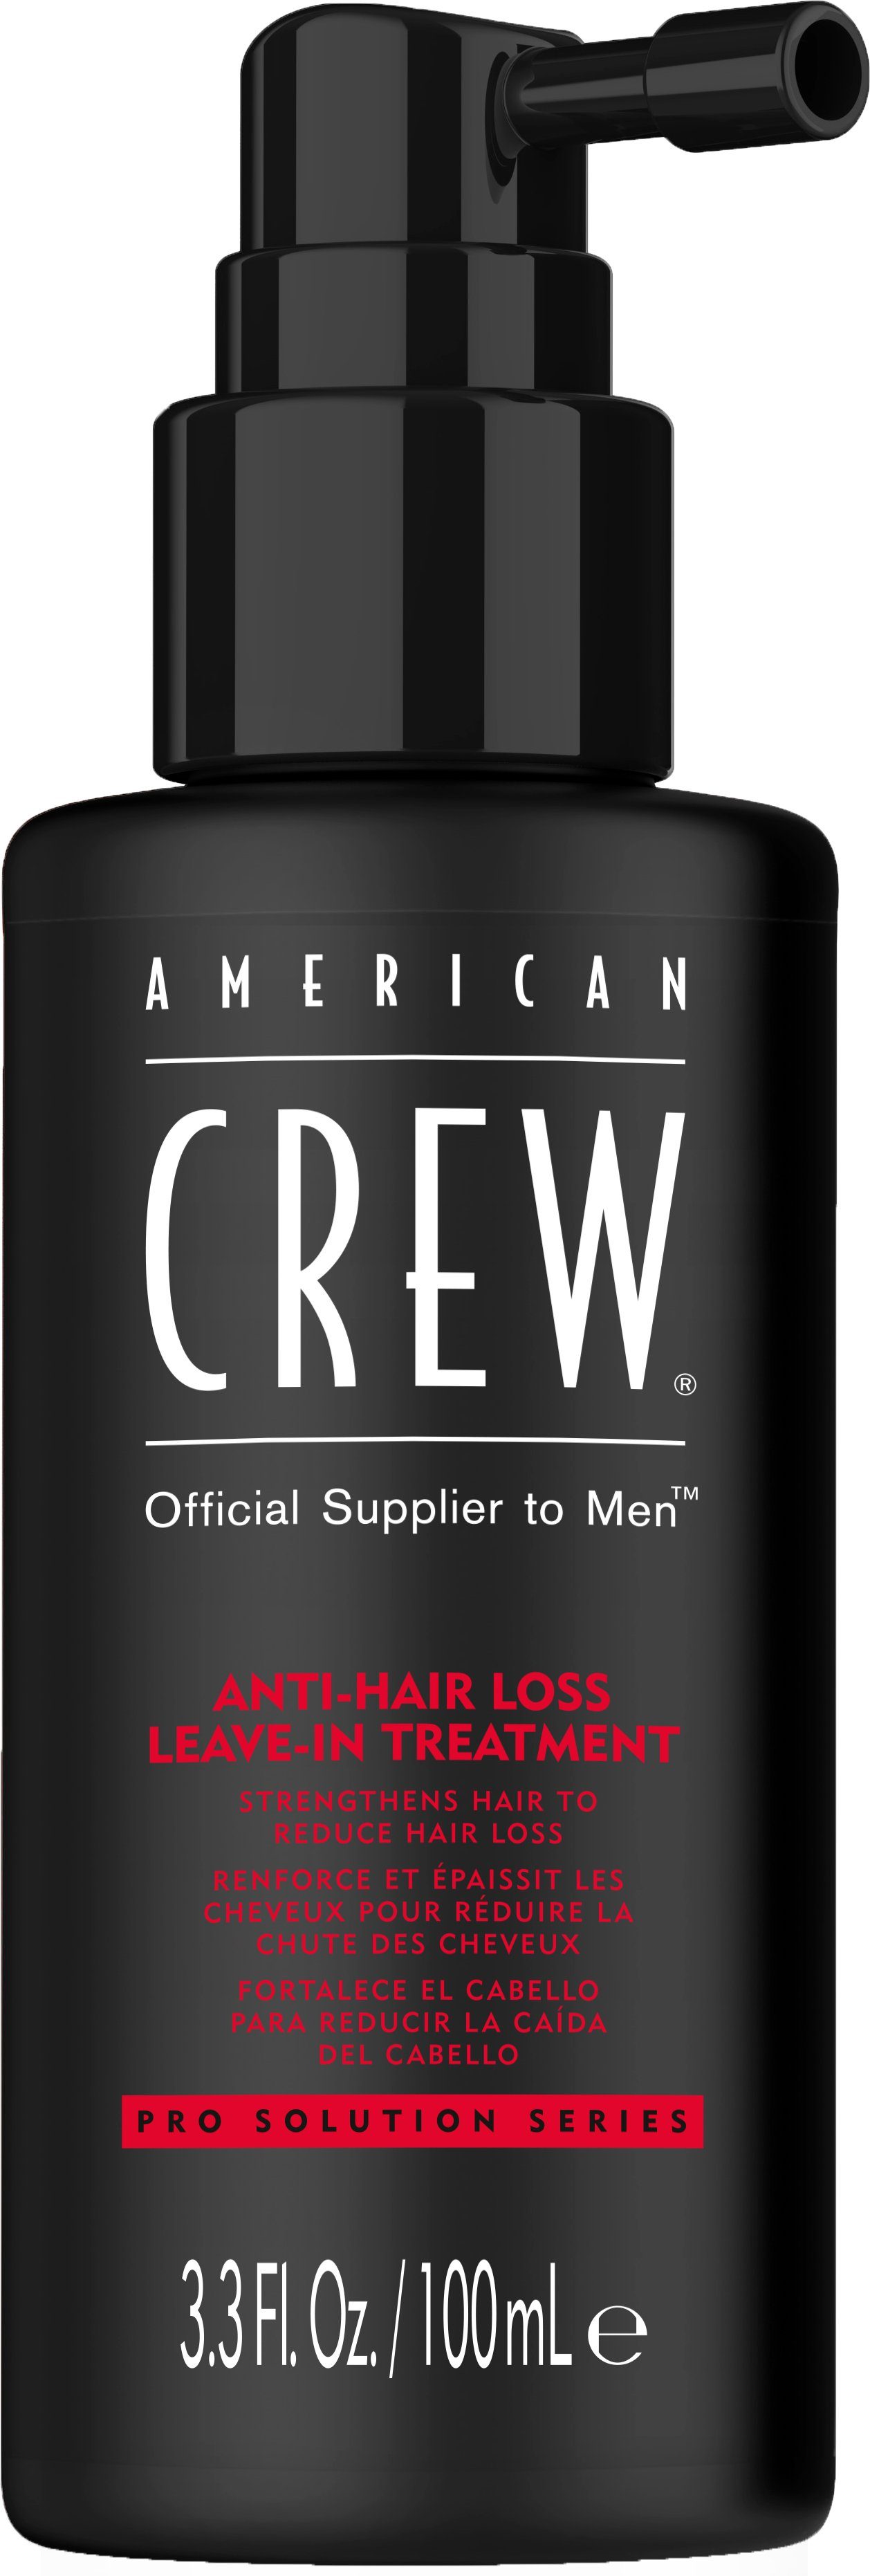 American Crew Leave-in Loss 100 Anti-Hair ml Pflege Treatment